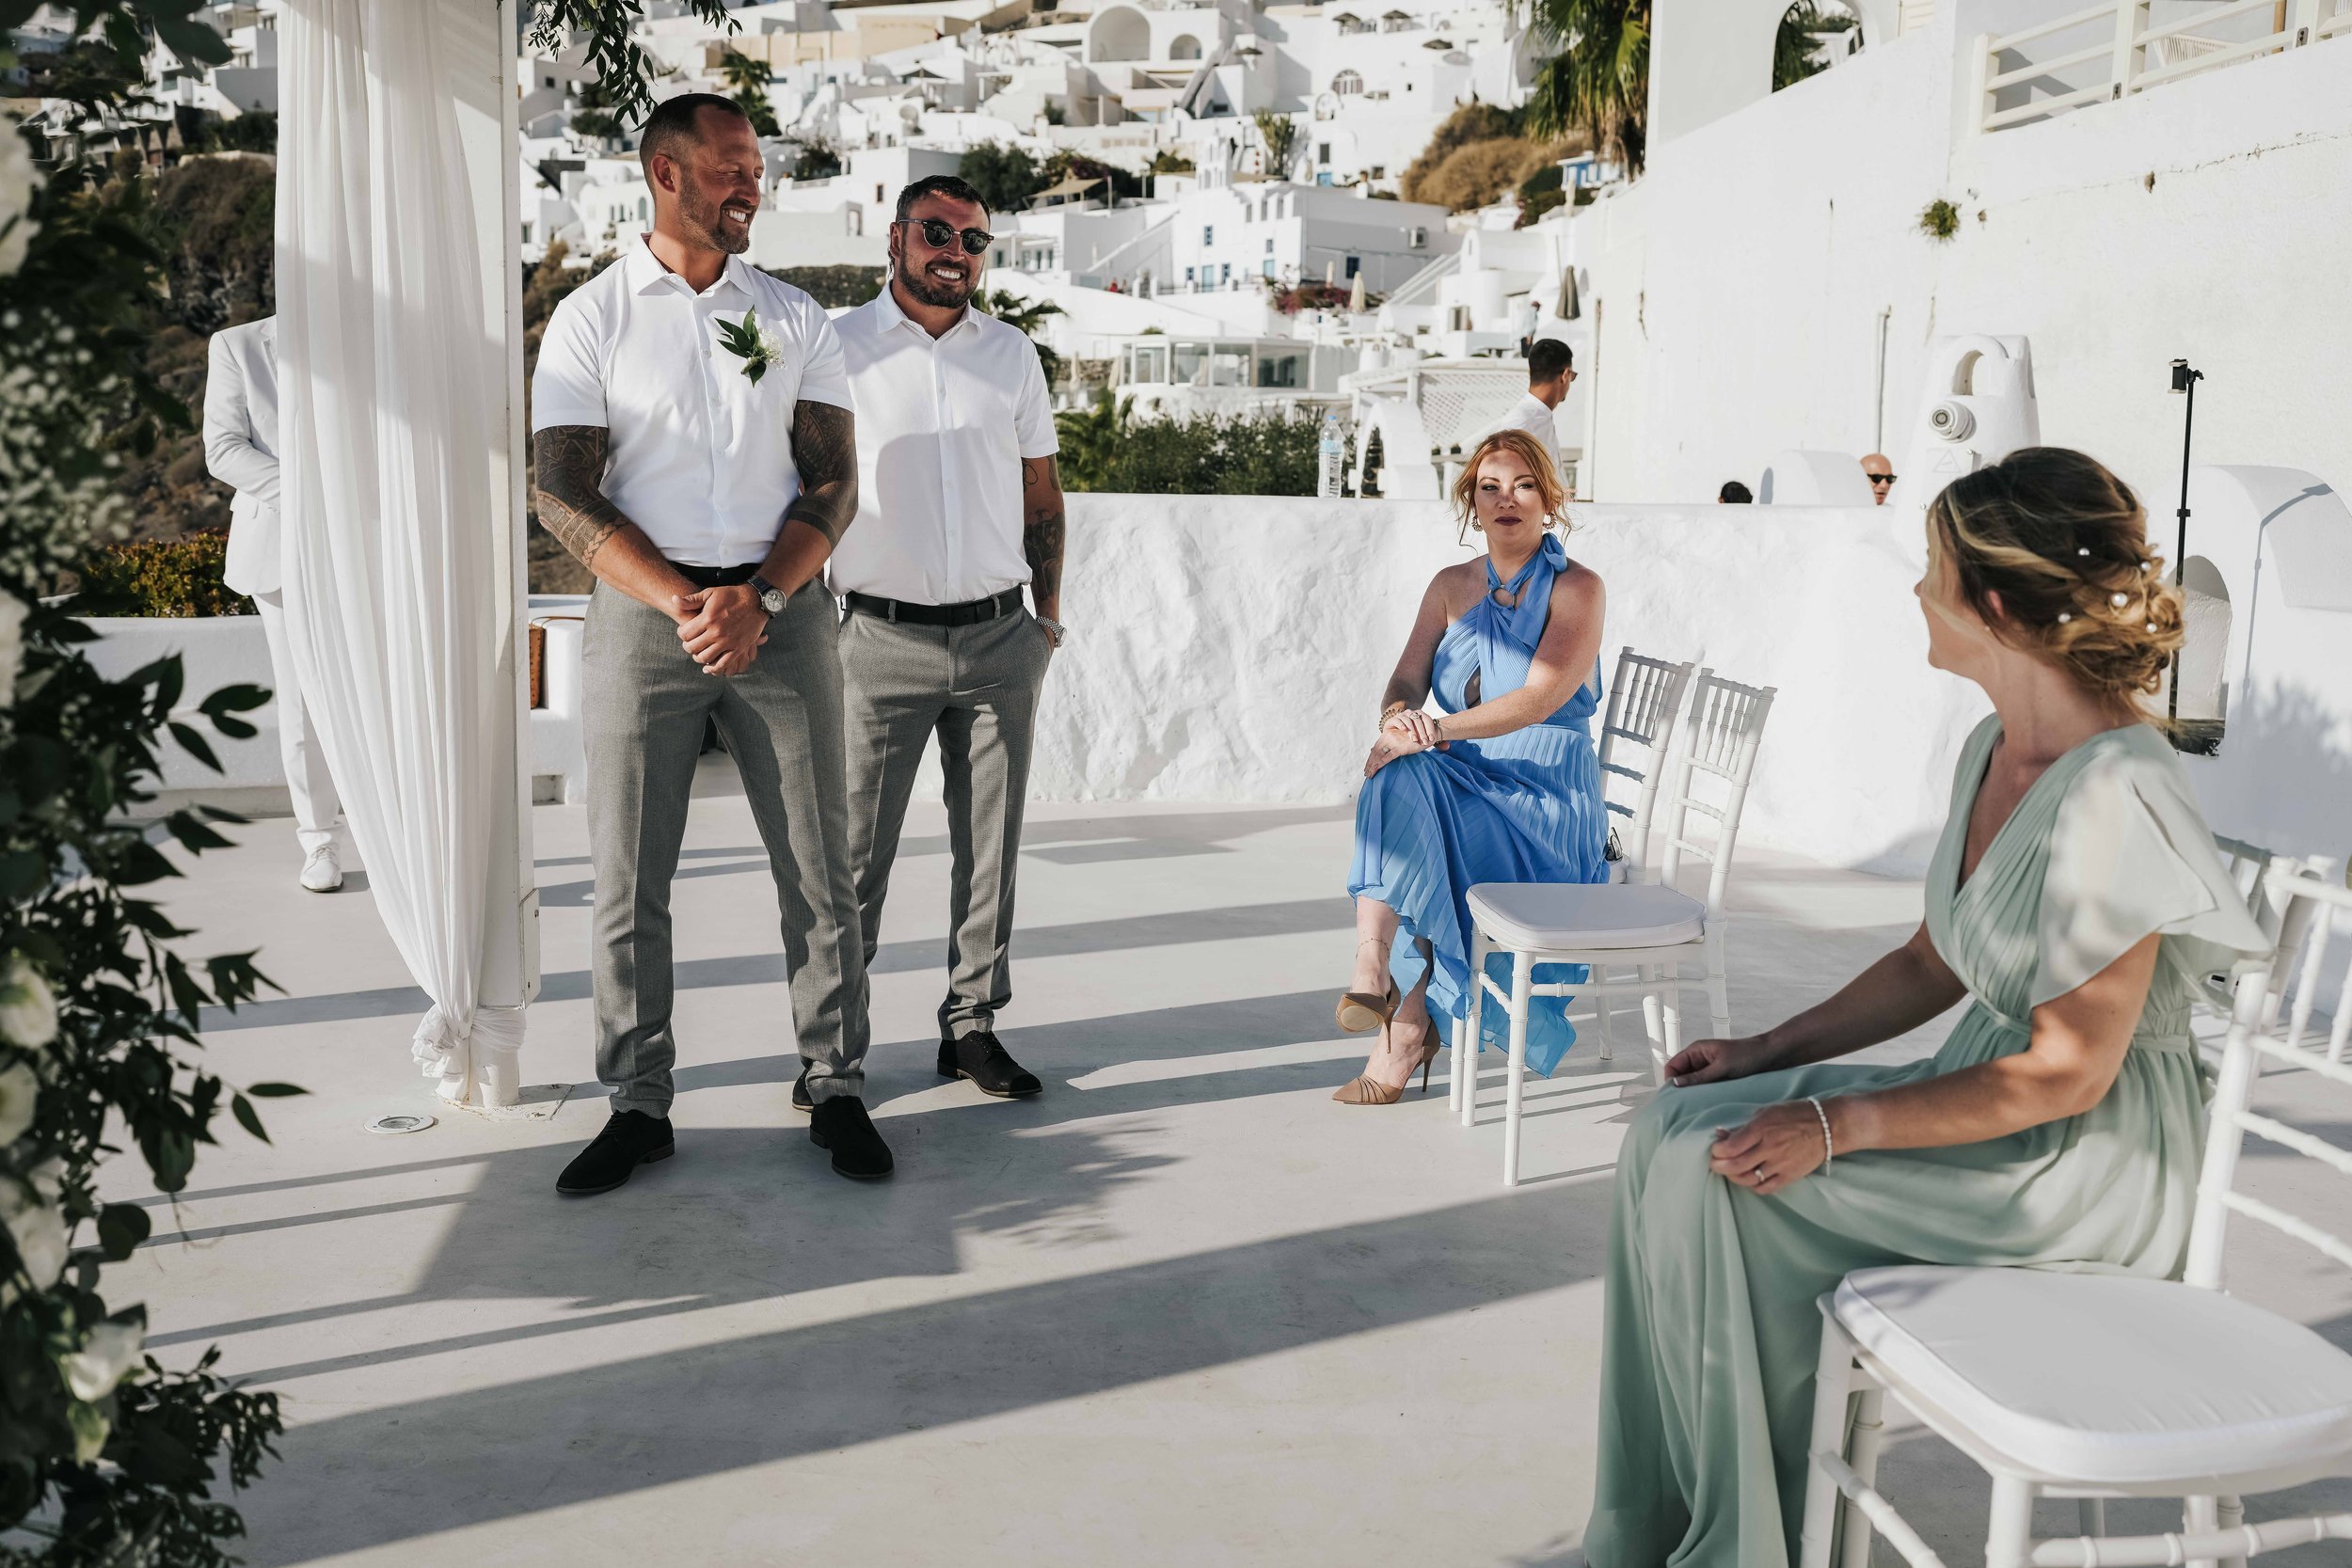 Santorini destination wedding Photography based in the UK - 017.jpg